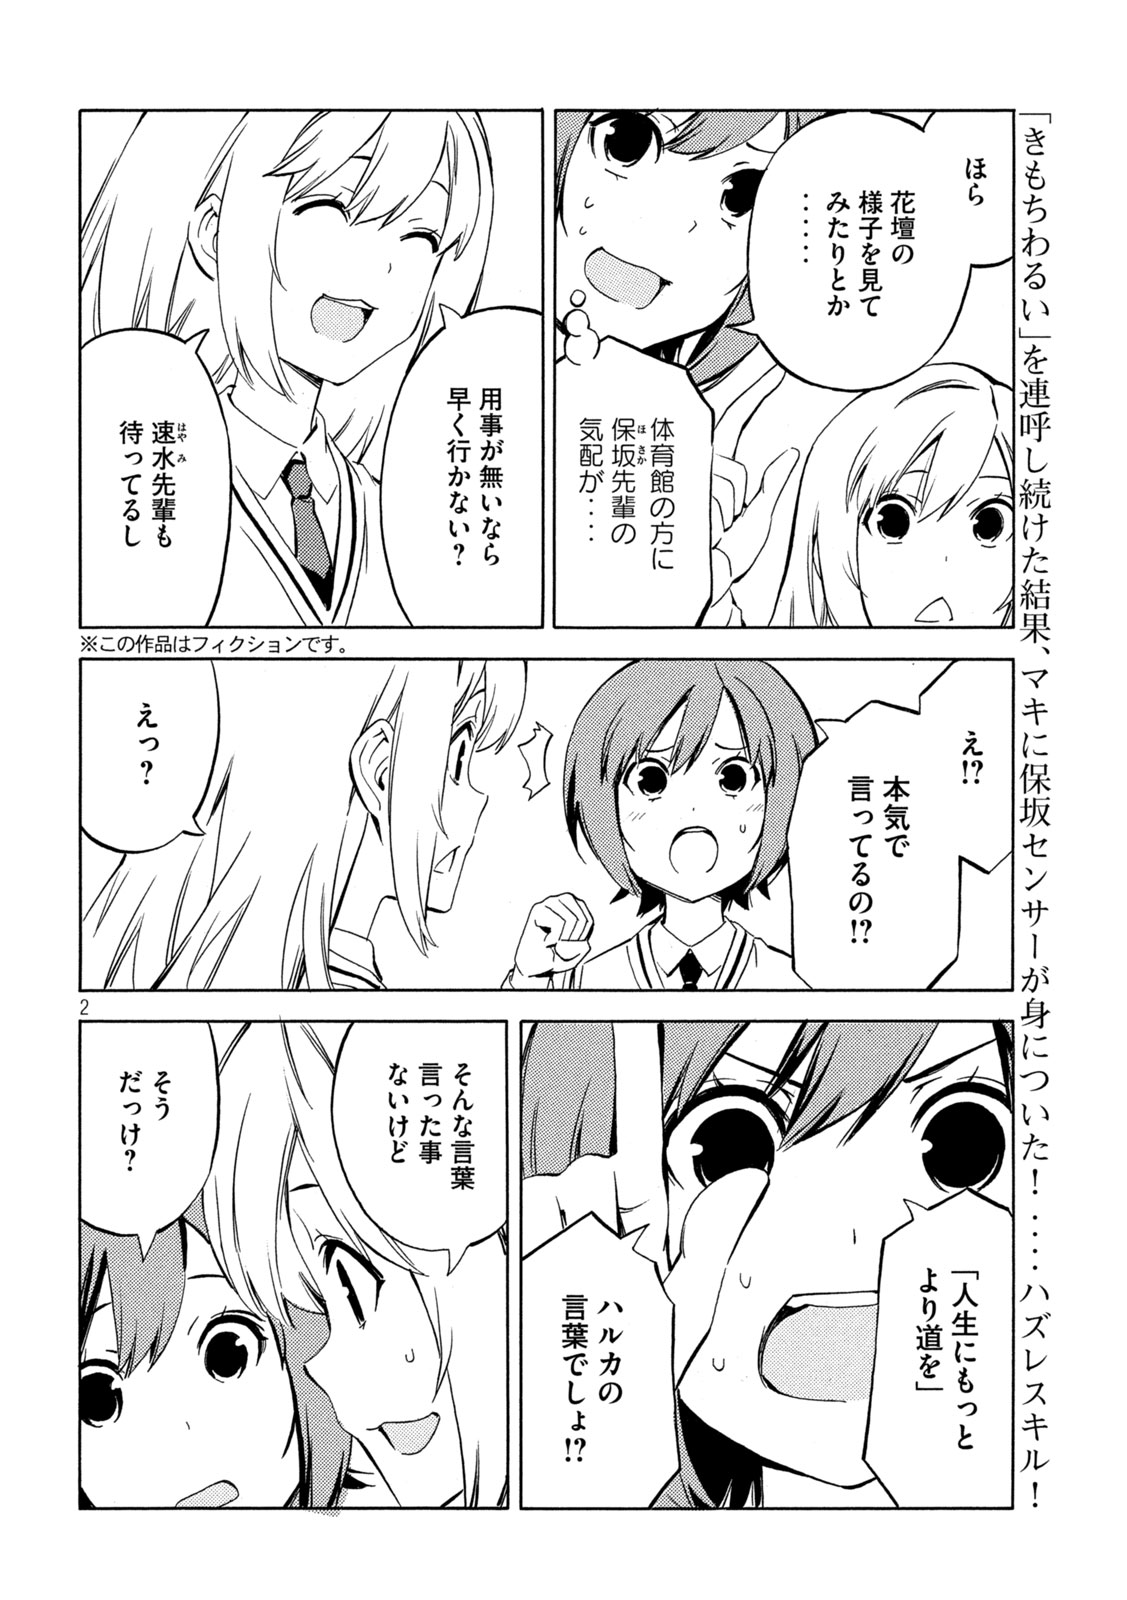 Minami-ke - Chapter 487 - Page 2